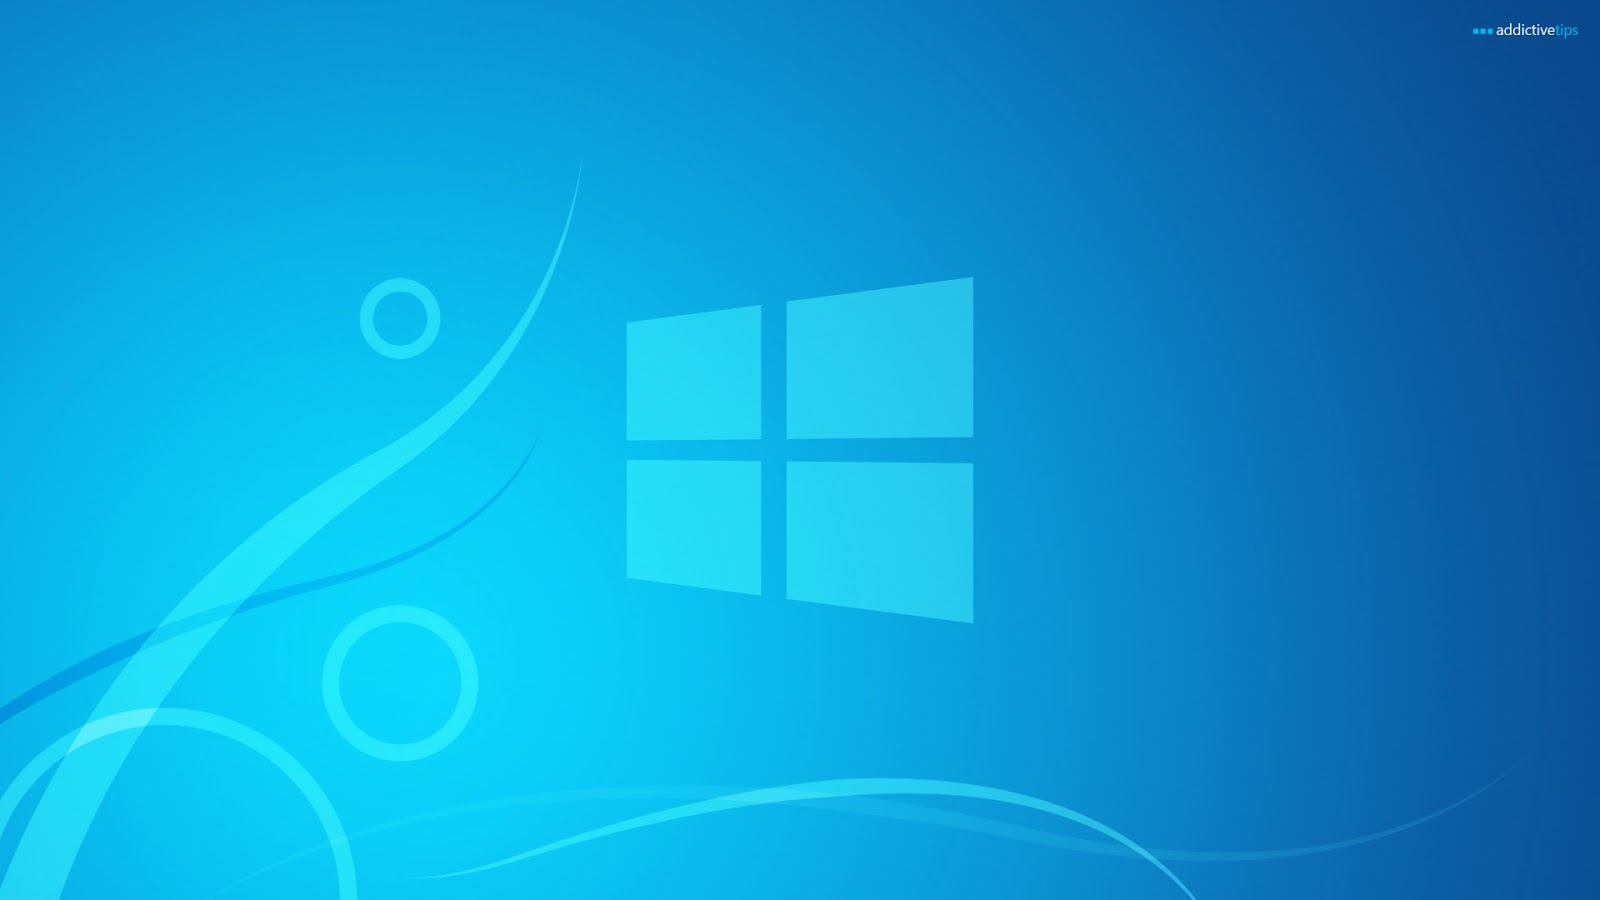 Windows 7 Wallpaper | My Blogger Tact | My Blogger Tact